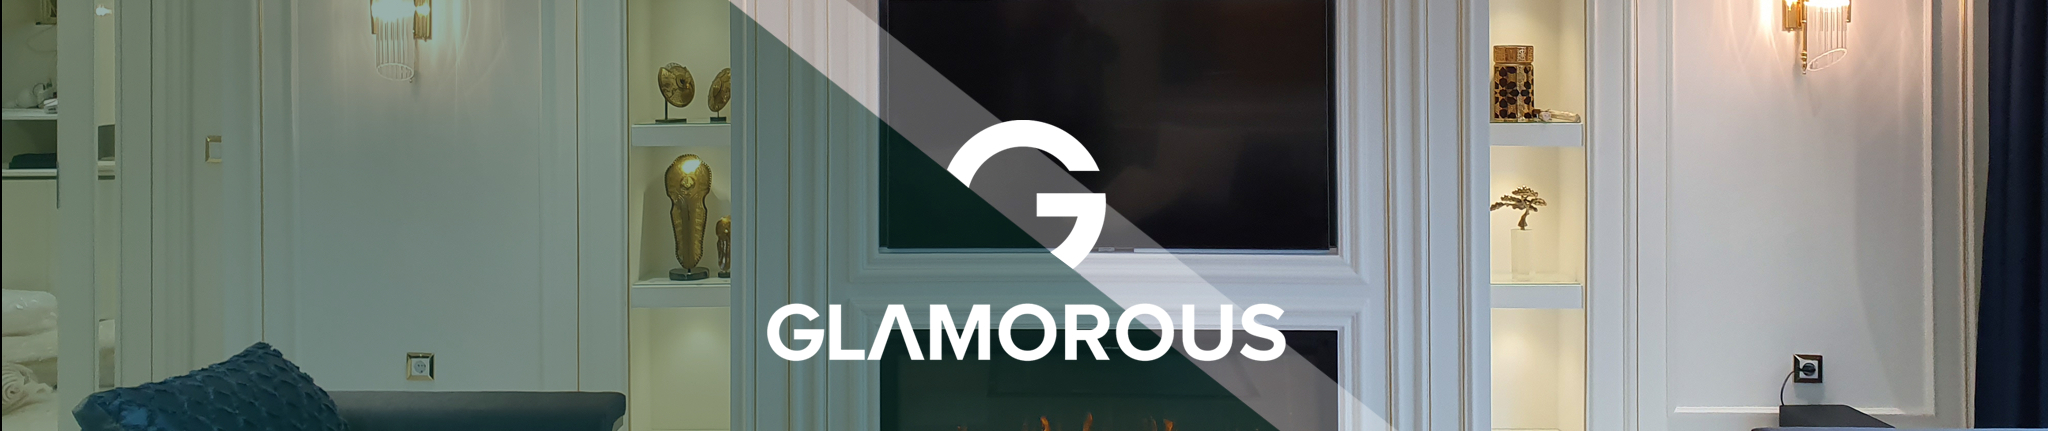 Glamorous Group's profile banner